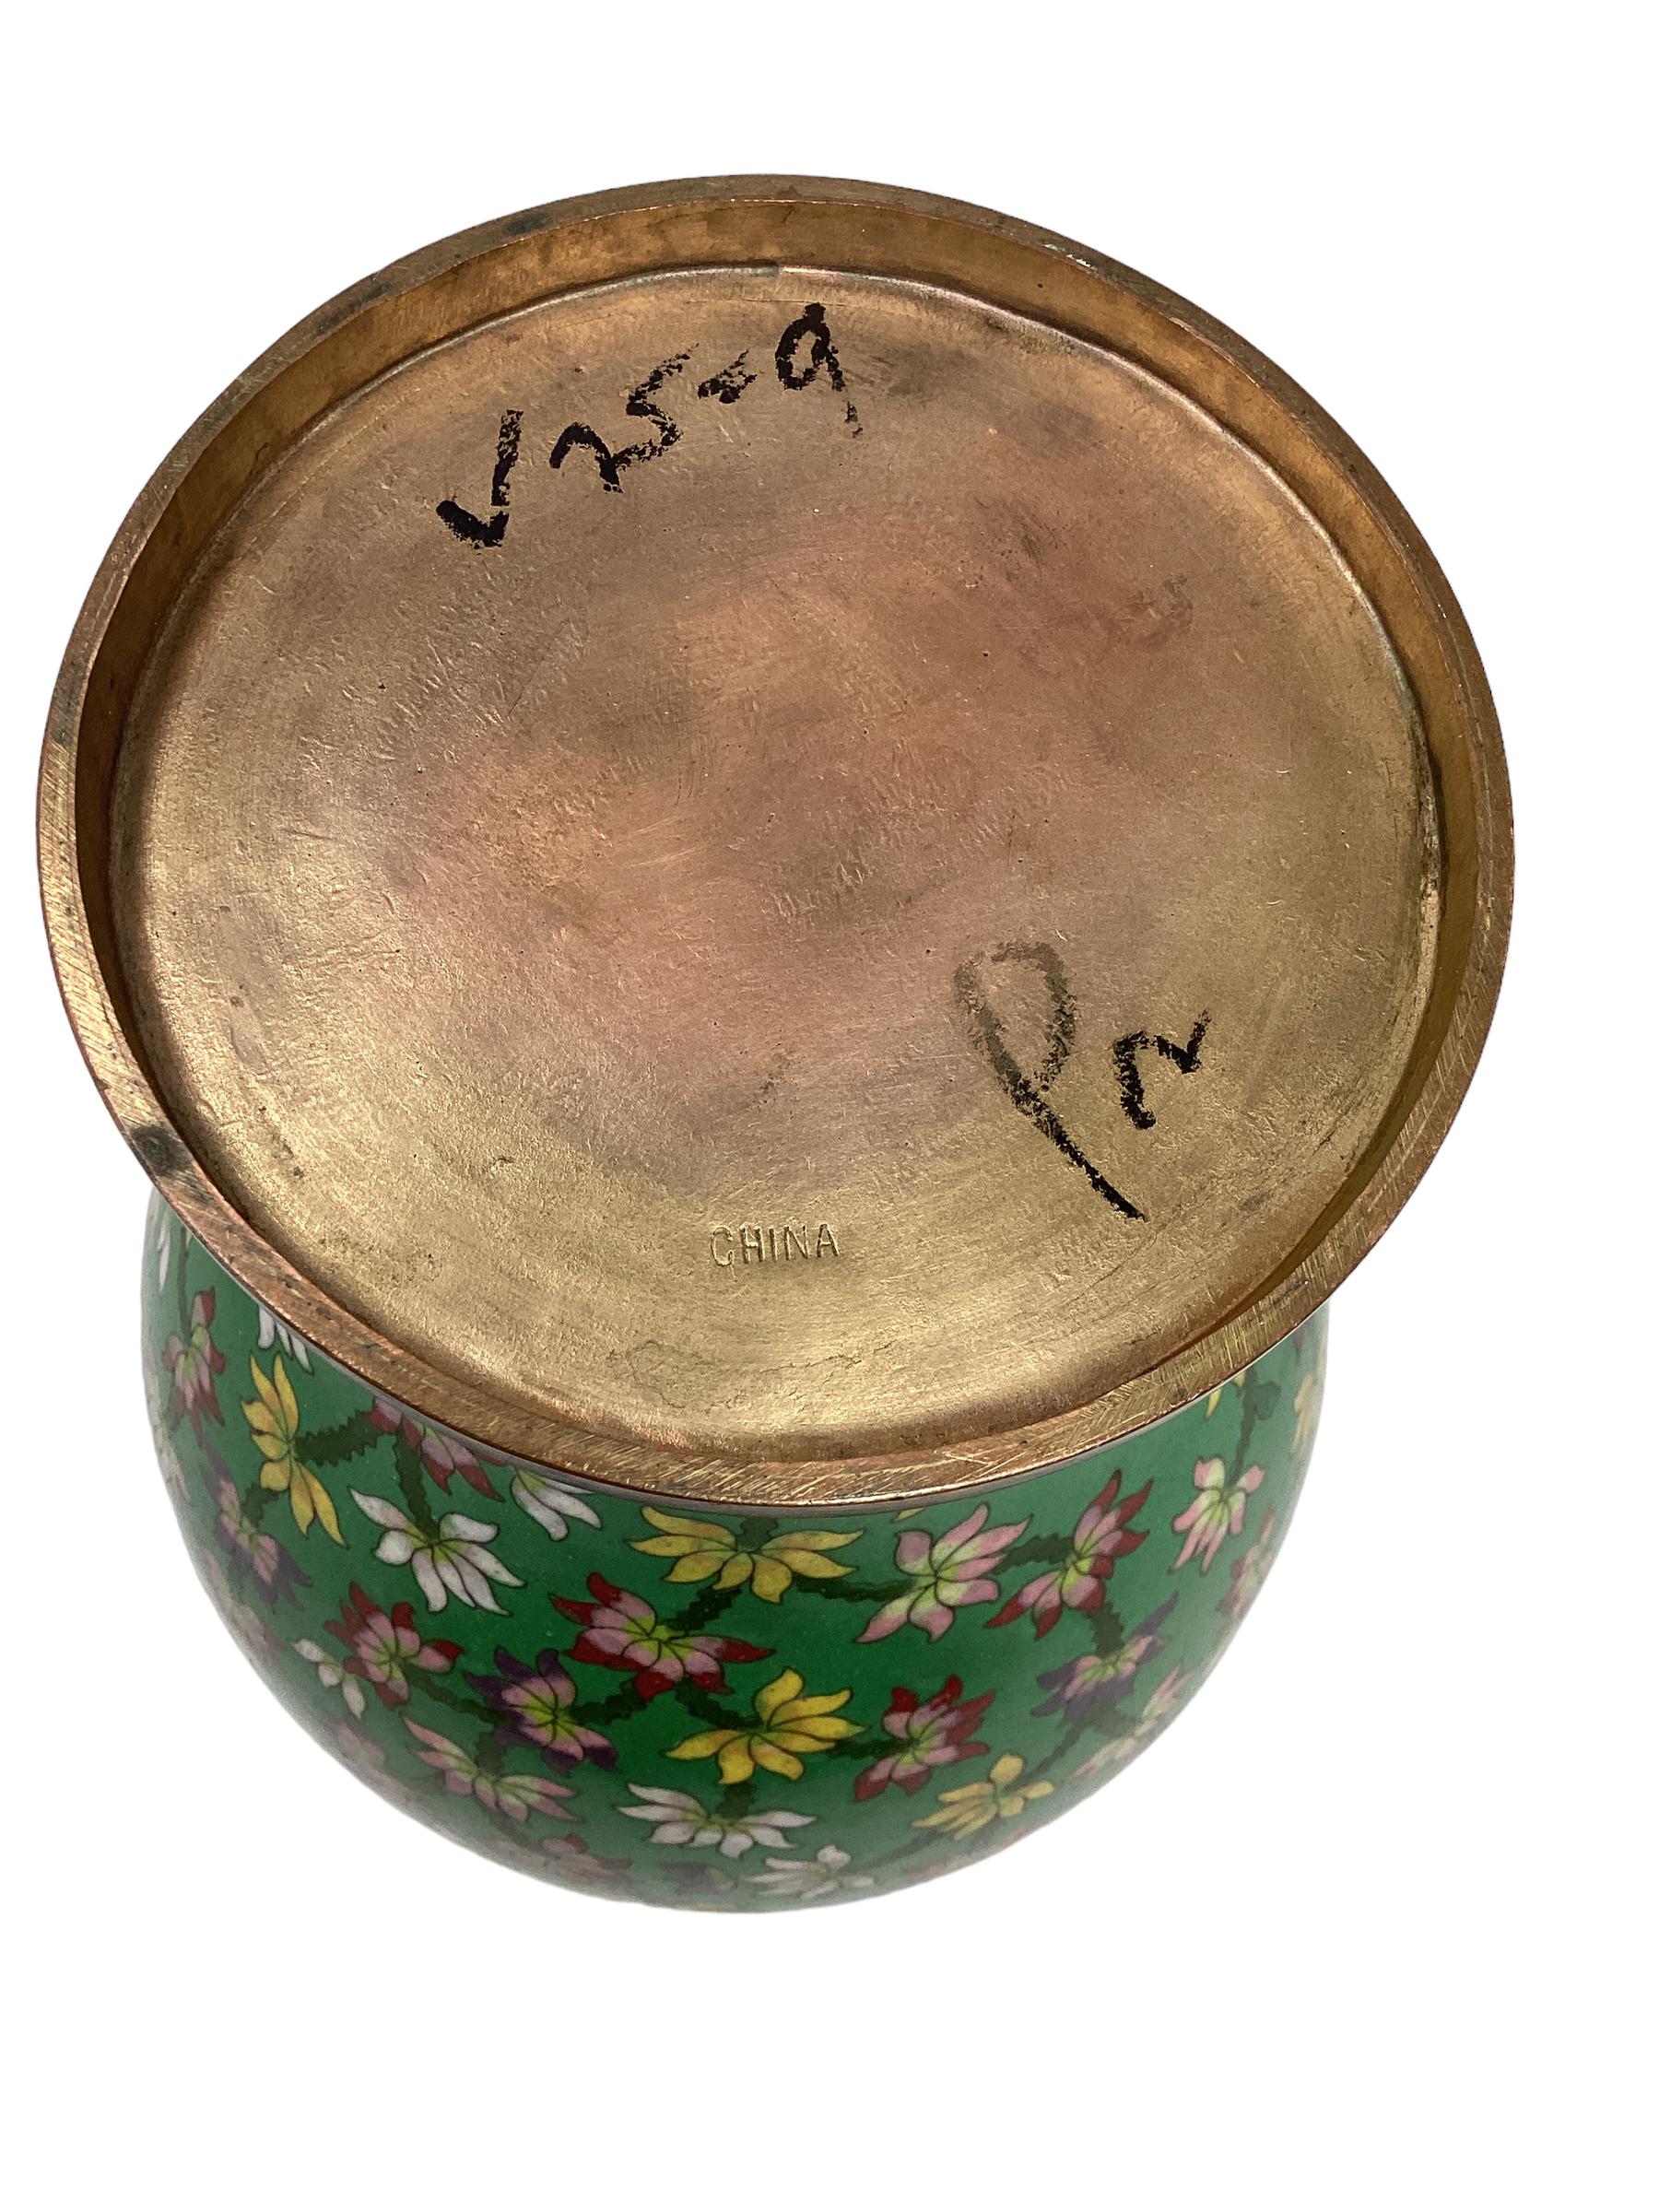 Cloissoné Pair of Antique Chinese Cloisonné Covered Ginger Jar Vases